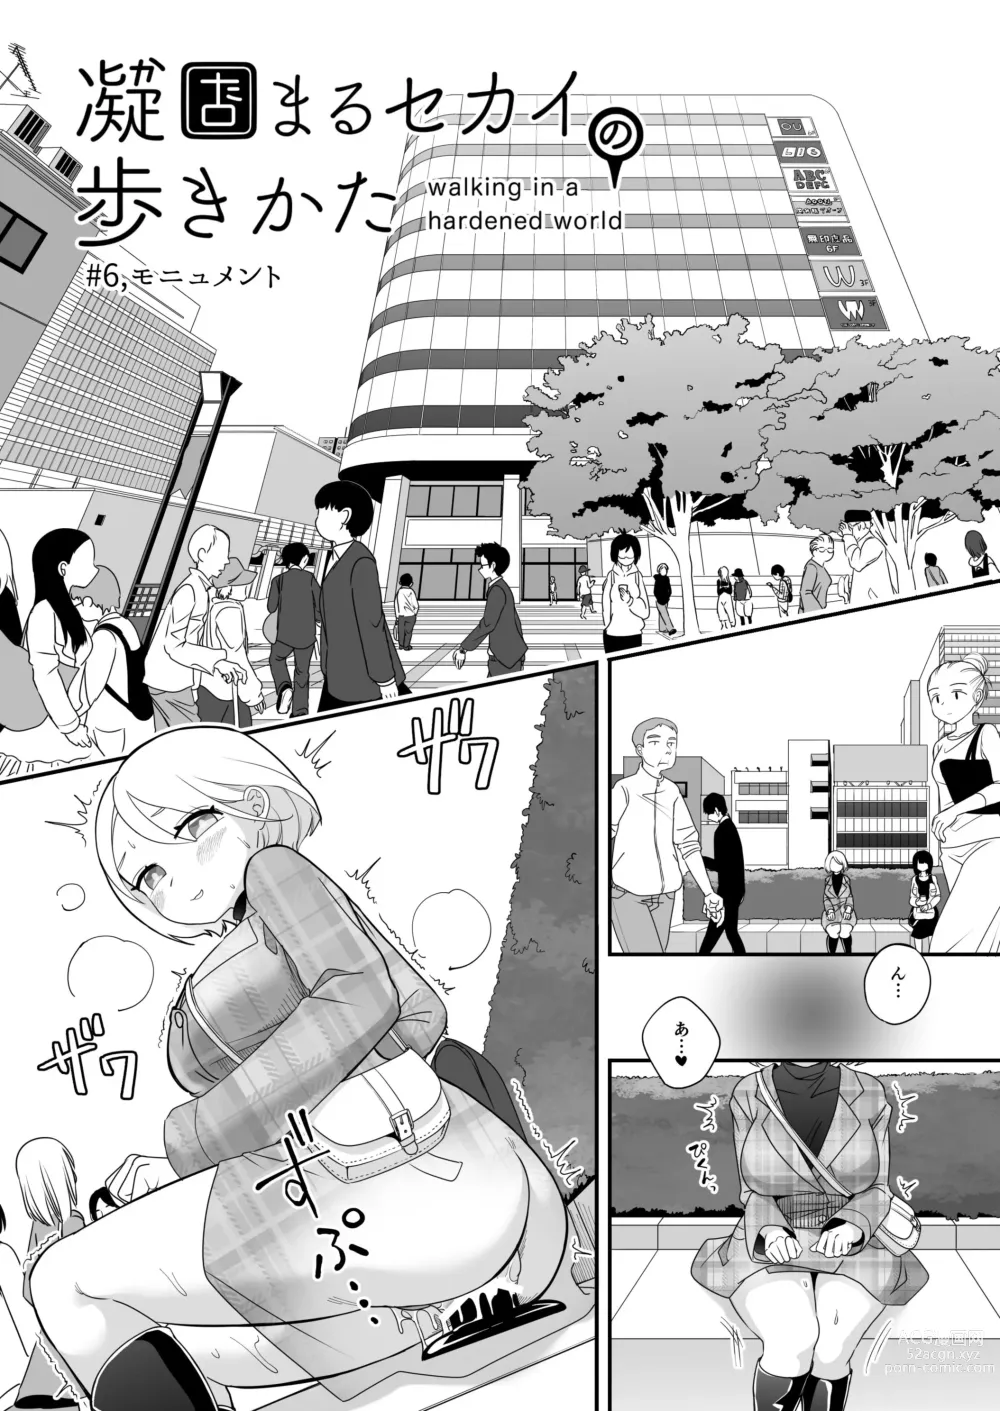 Page 2 of doujinshi Katamaru Sekai no Arukikata - walking in a hardened world #7